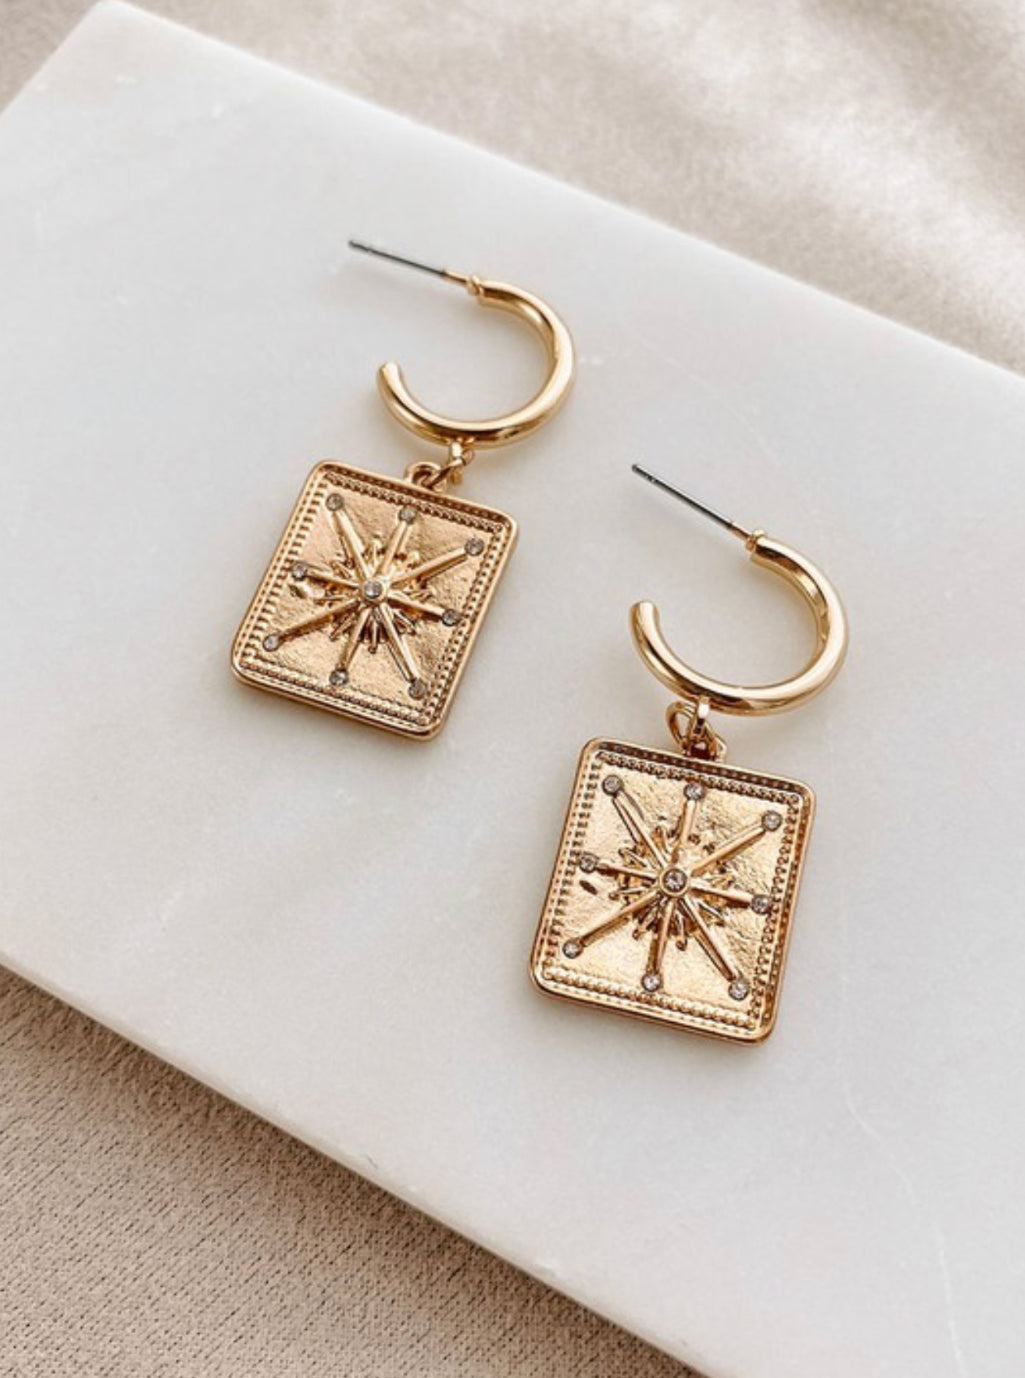 Star charm earrings